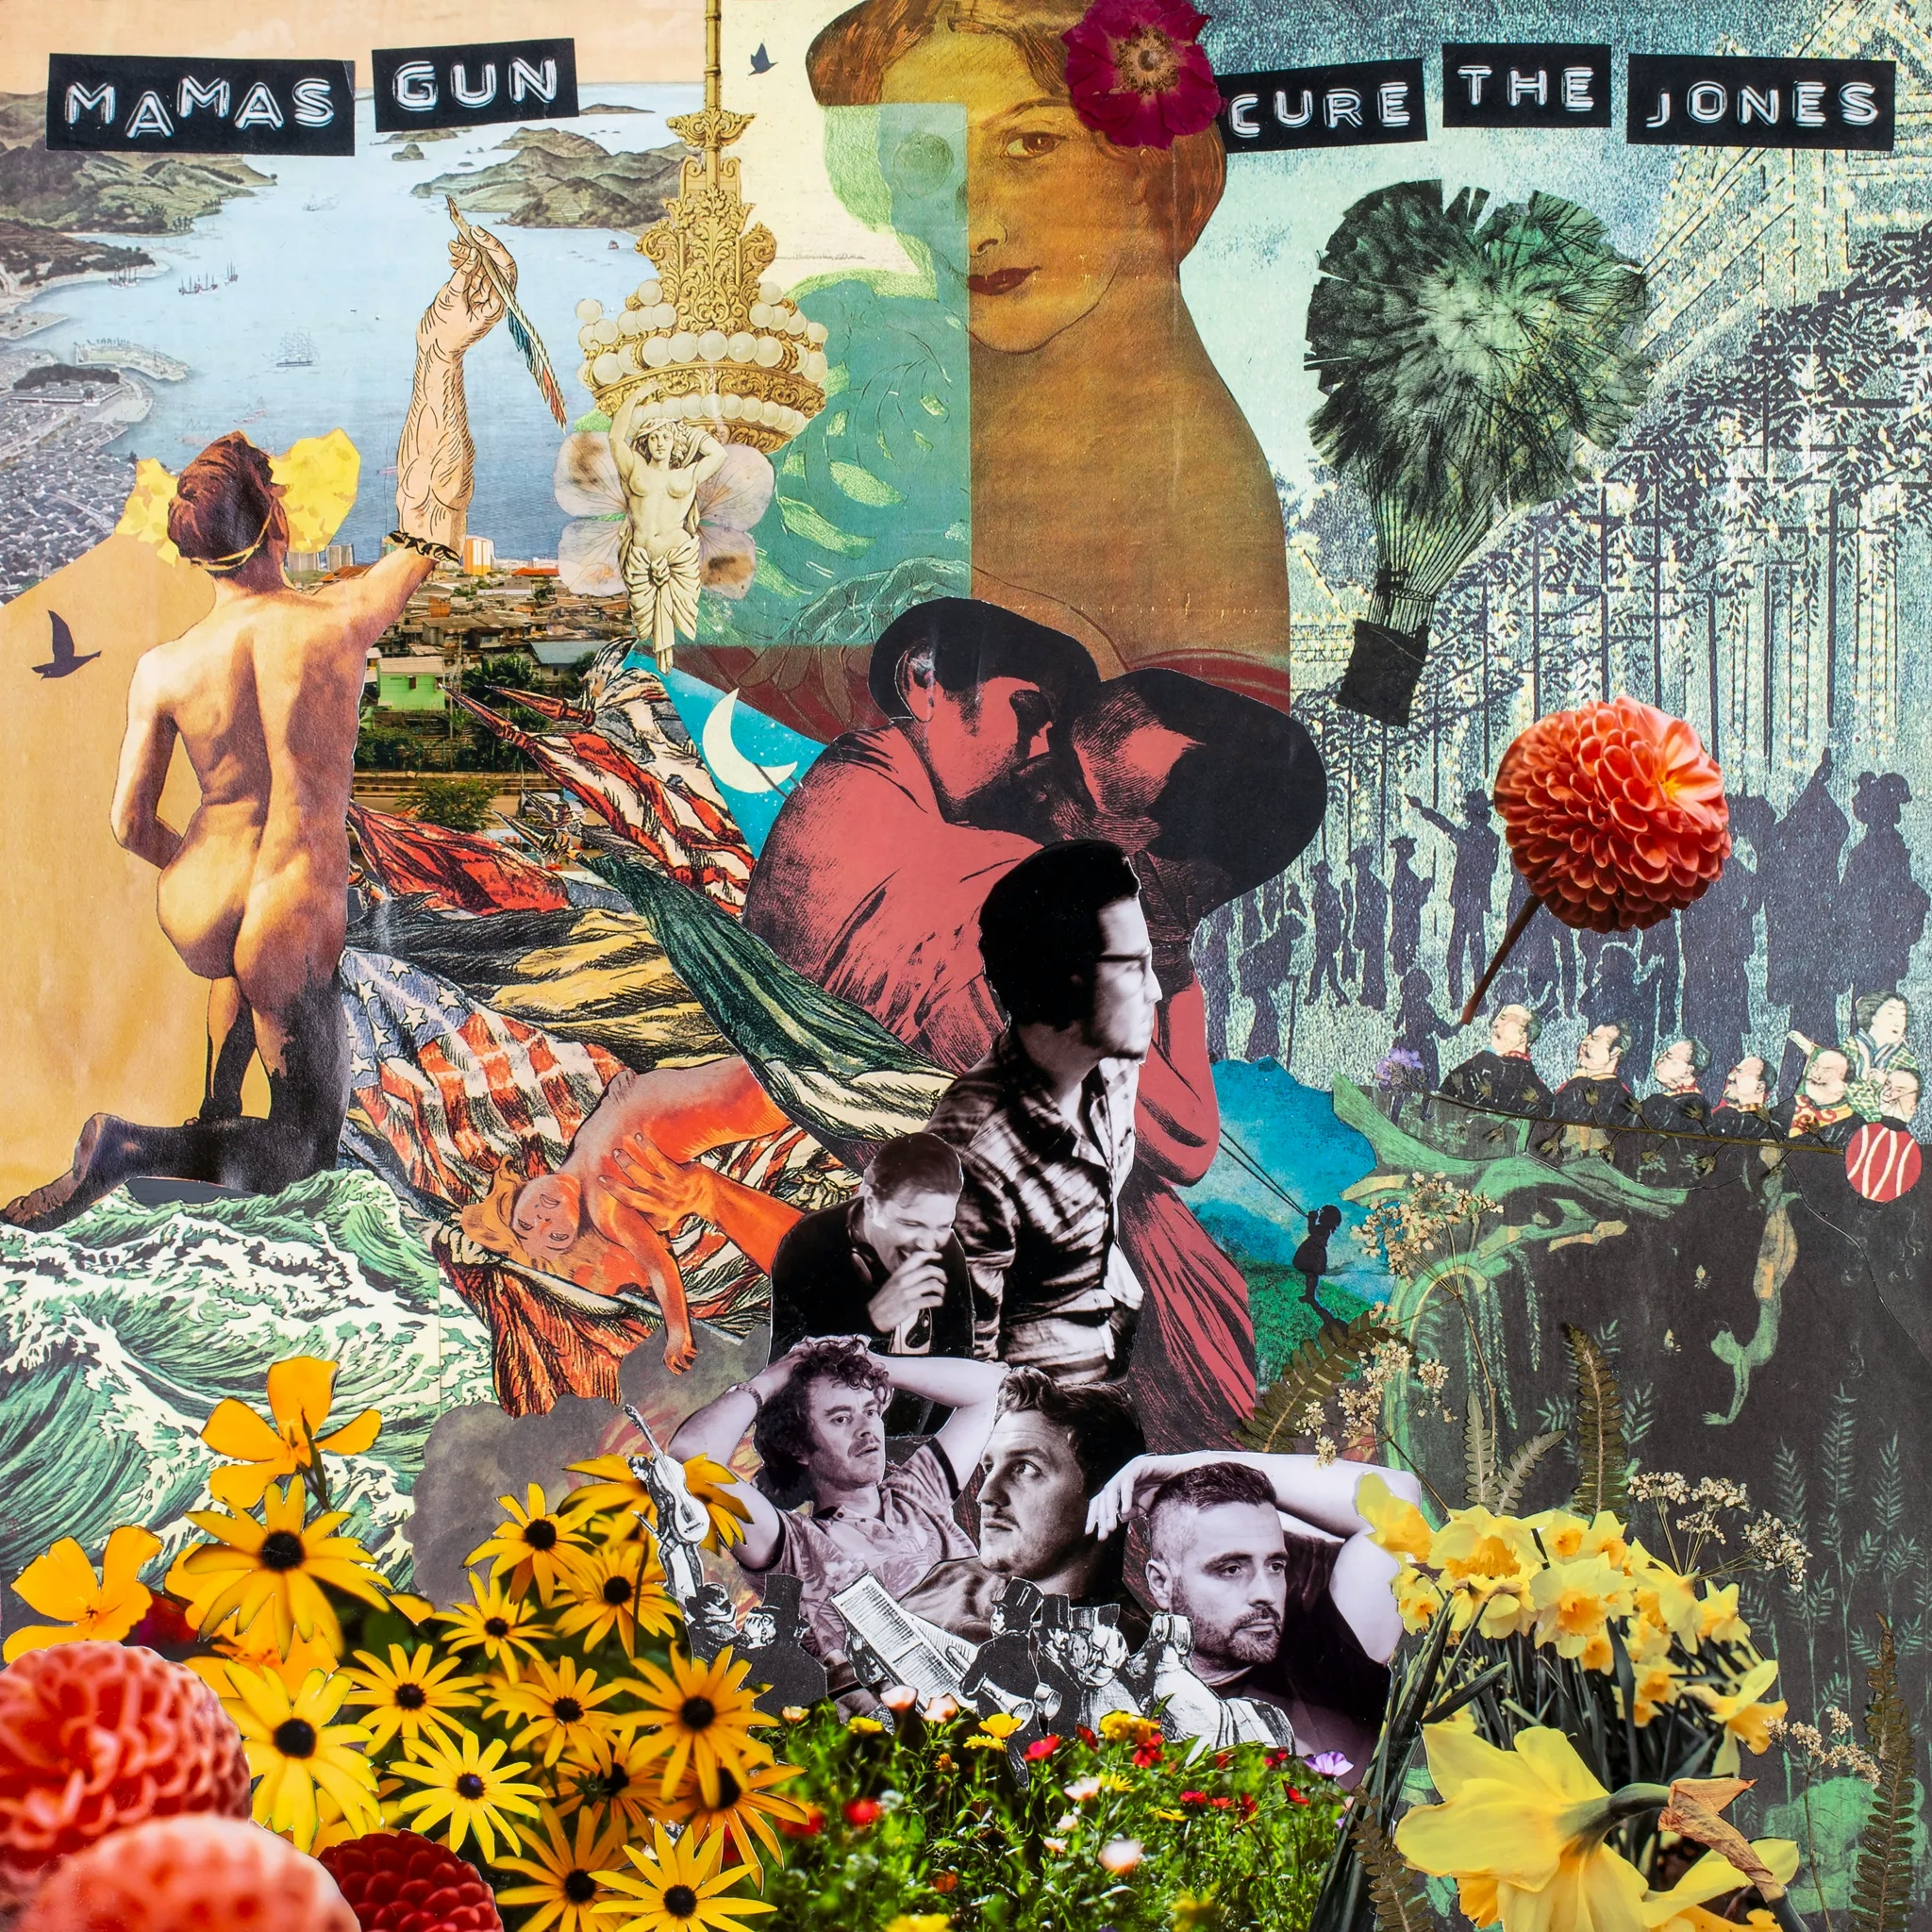 Album artwork for Album artwork for Cure The Jones by Mamas Gun by Cure The Jones - Mamas Gun